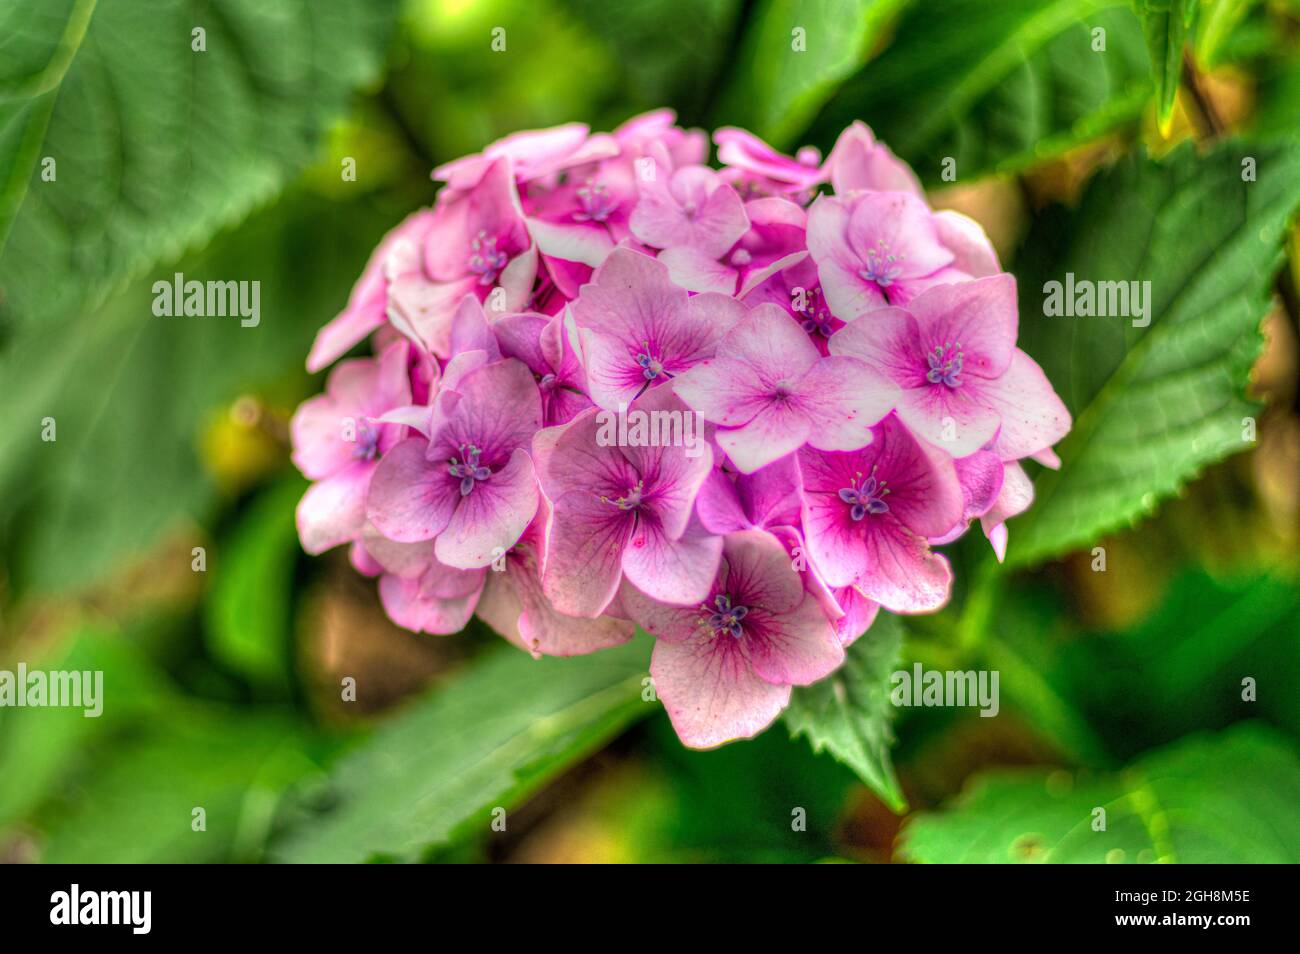 Closeup shot of purple flame flowers of phlox (Phlox paniculata) Stock Photo